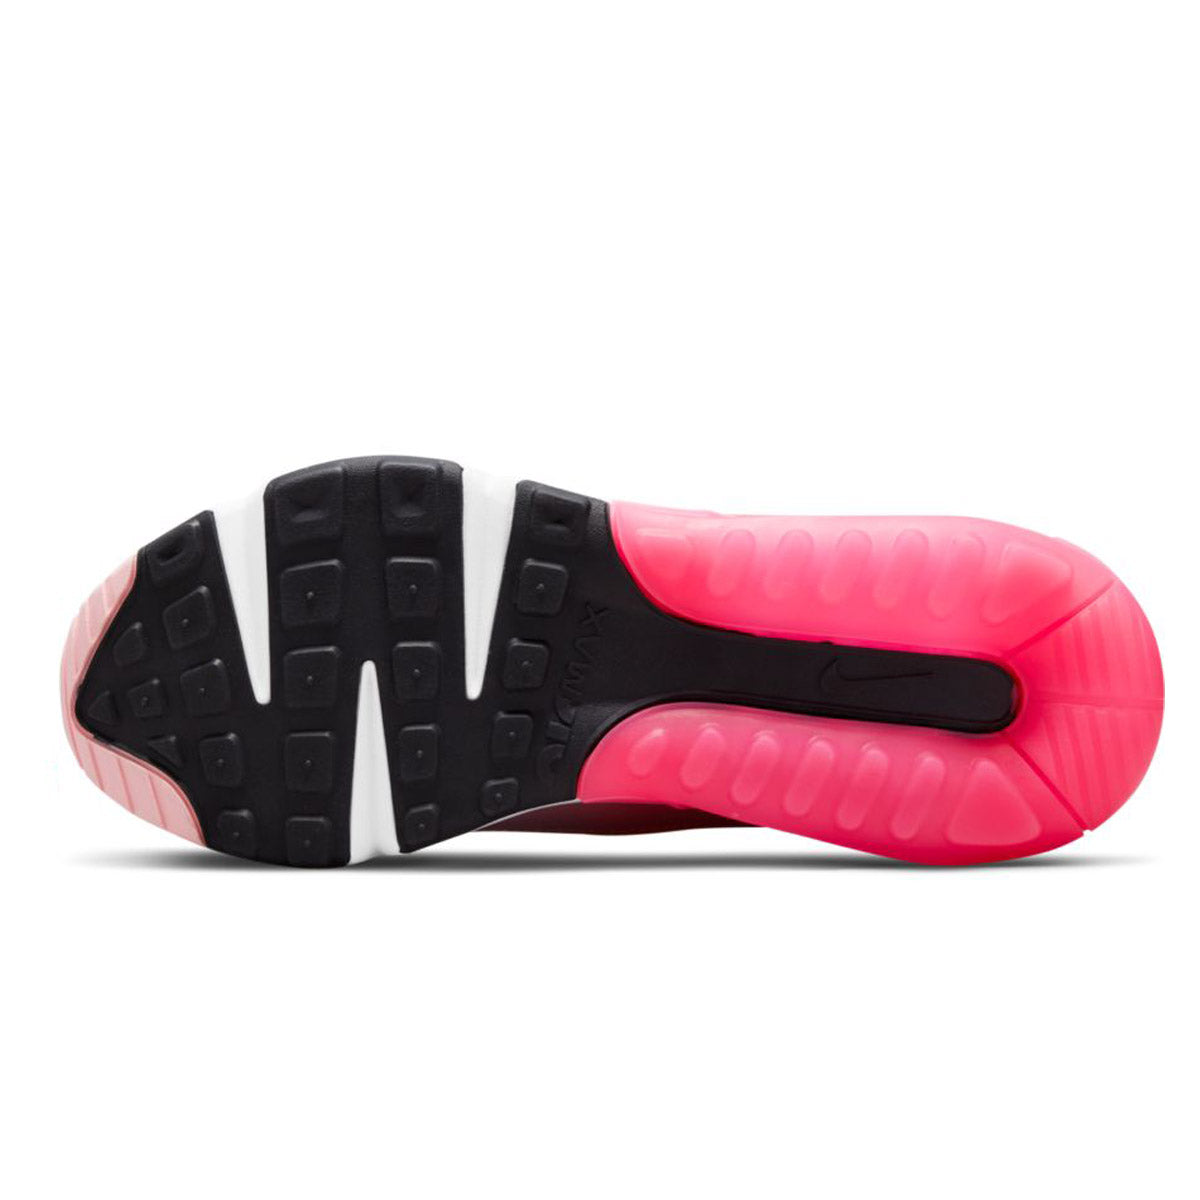 Nike Air Max 2090 Black/Hyper Pink-Arctic Punch-White